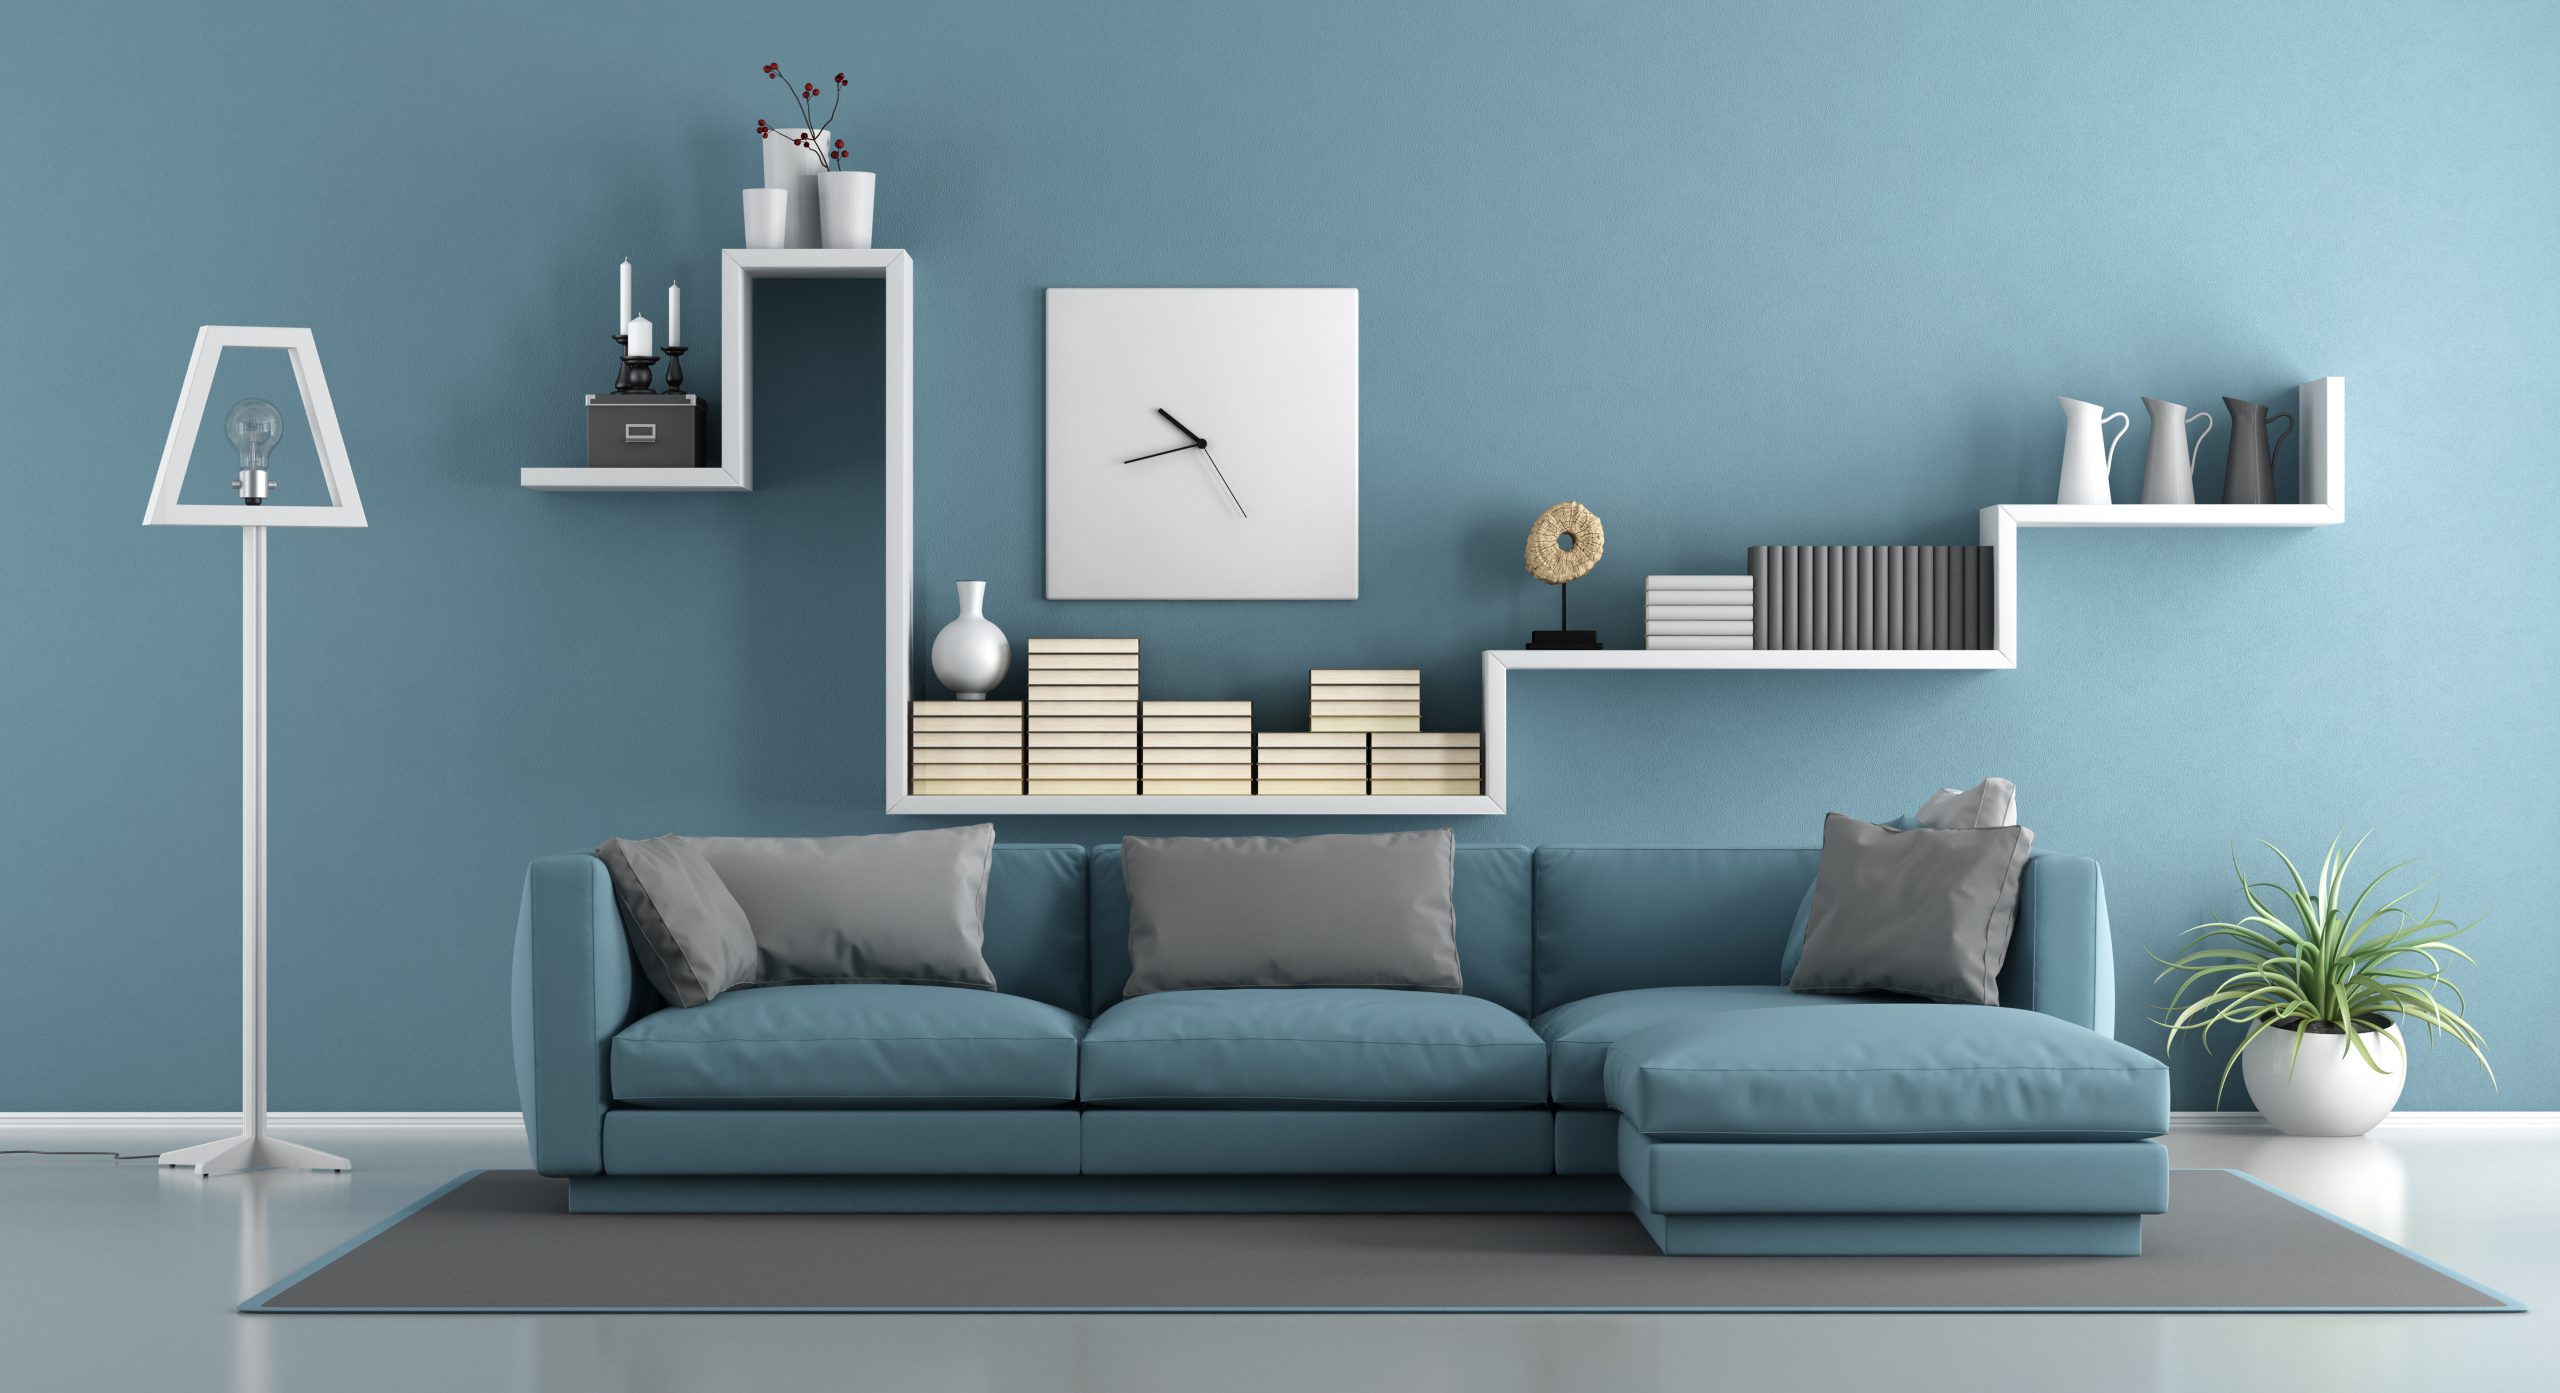 Blue Living Room